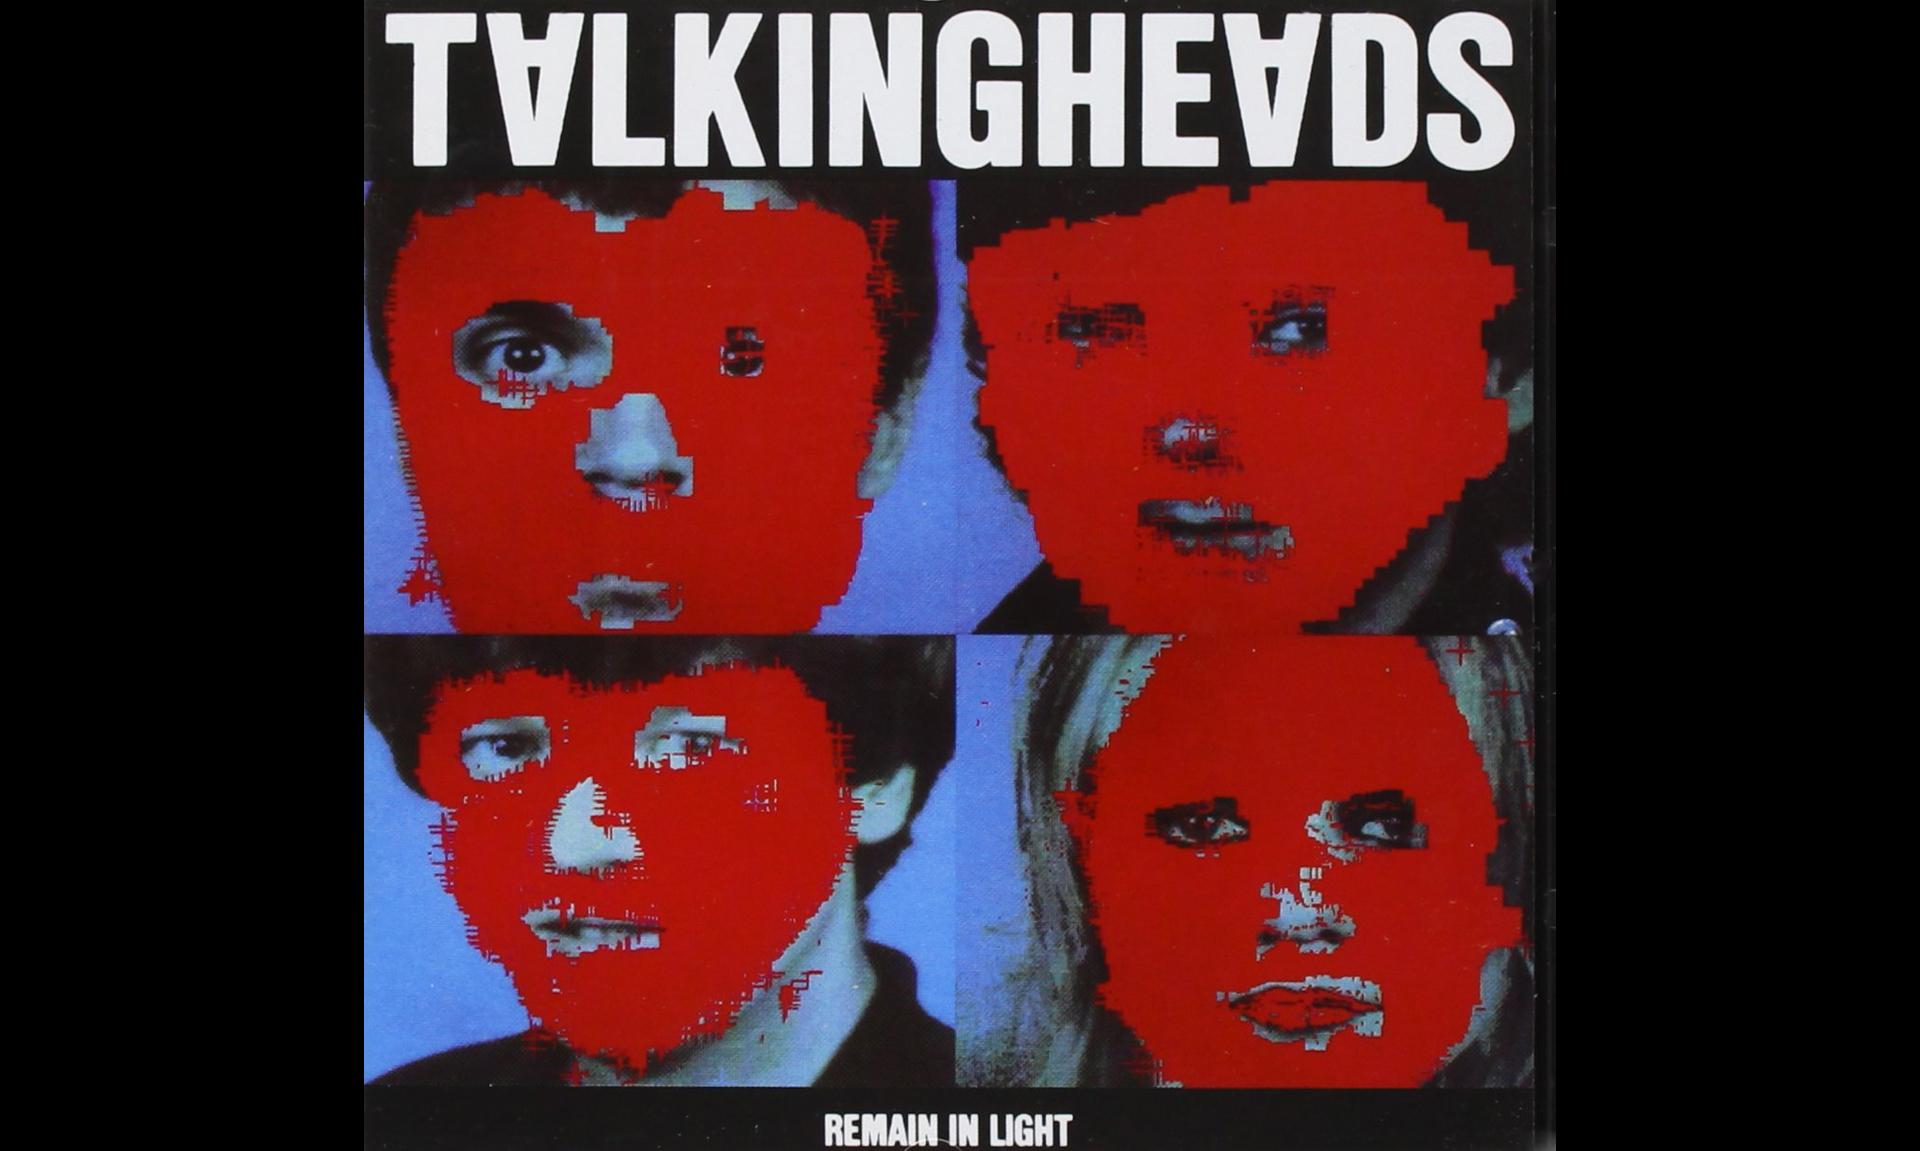 “Remain In Light,” the landmark 1980 album by Talking Heads.